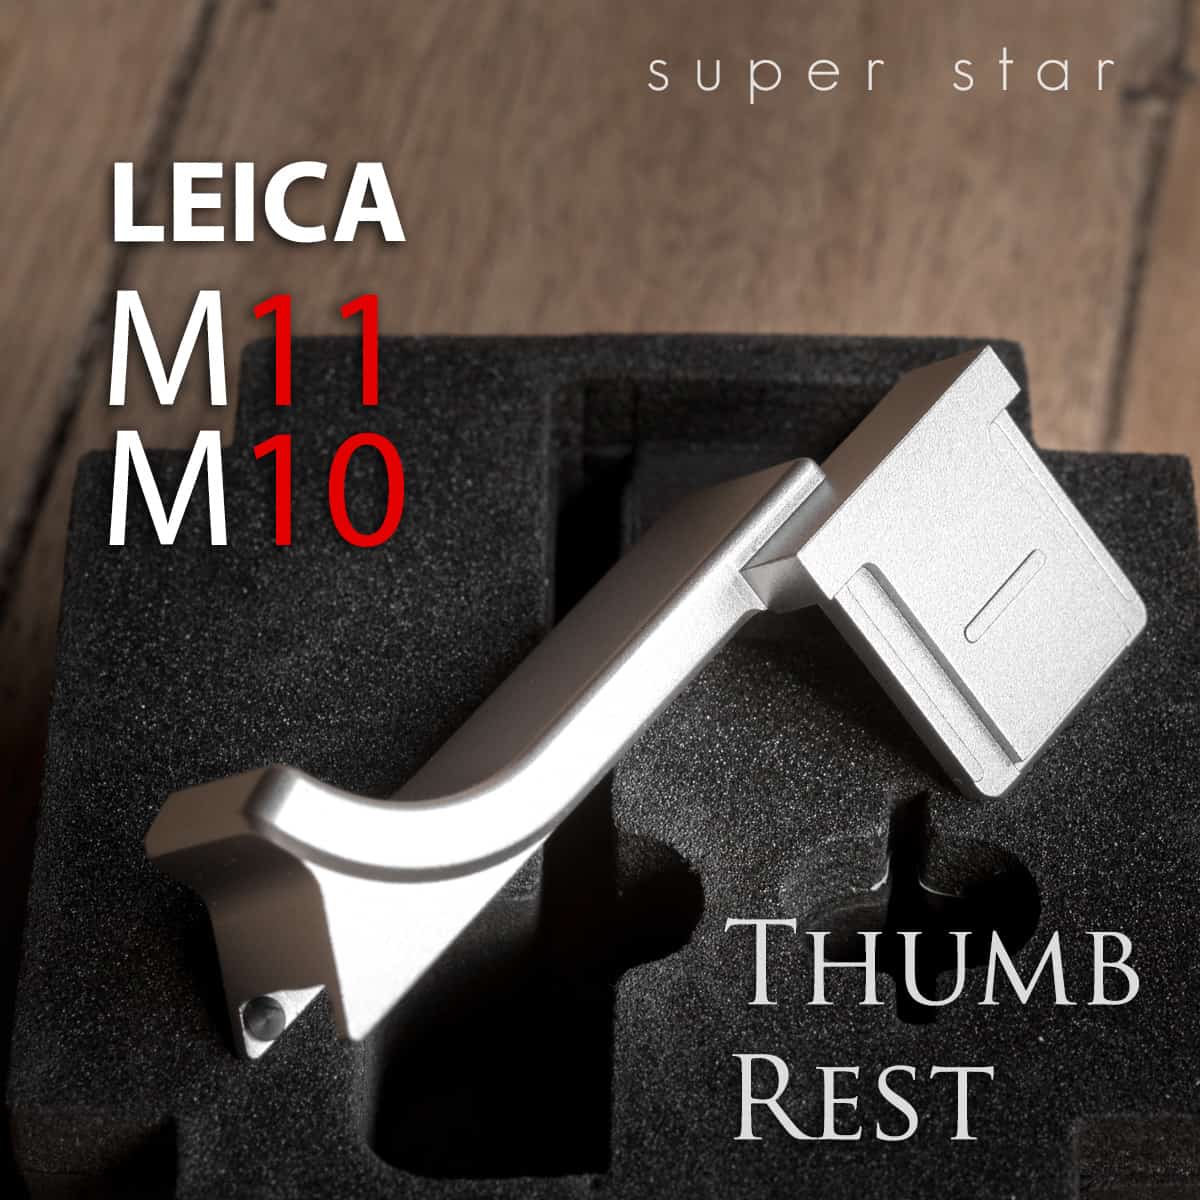 Thumb Rest Leica M11 M10 Silver ที่พักนิ้ว Hand Grip จาก Super Star